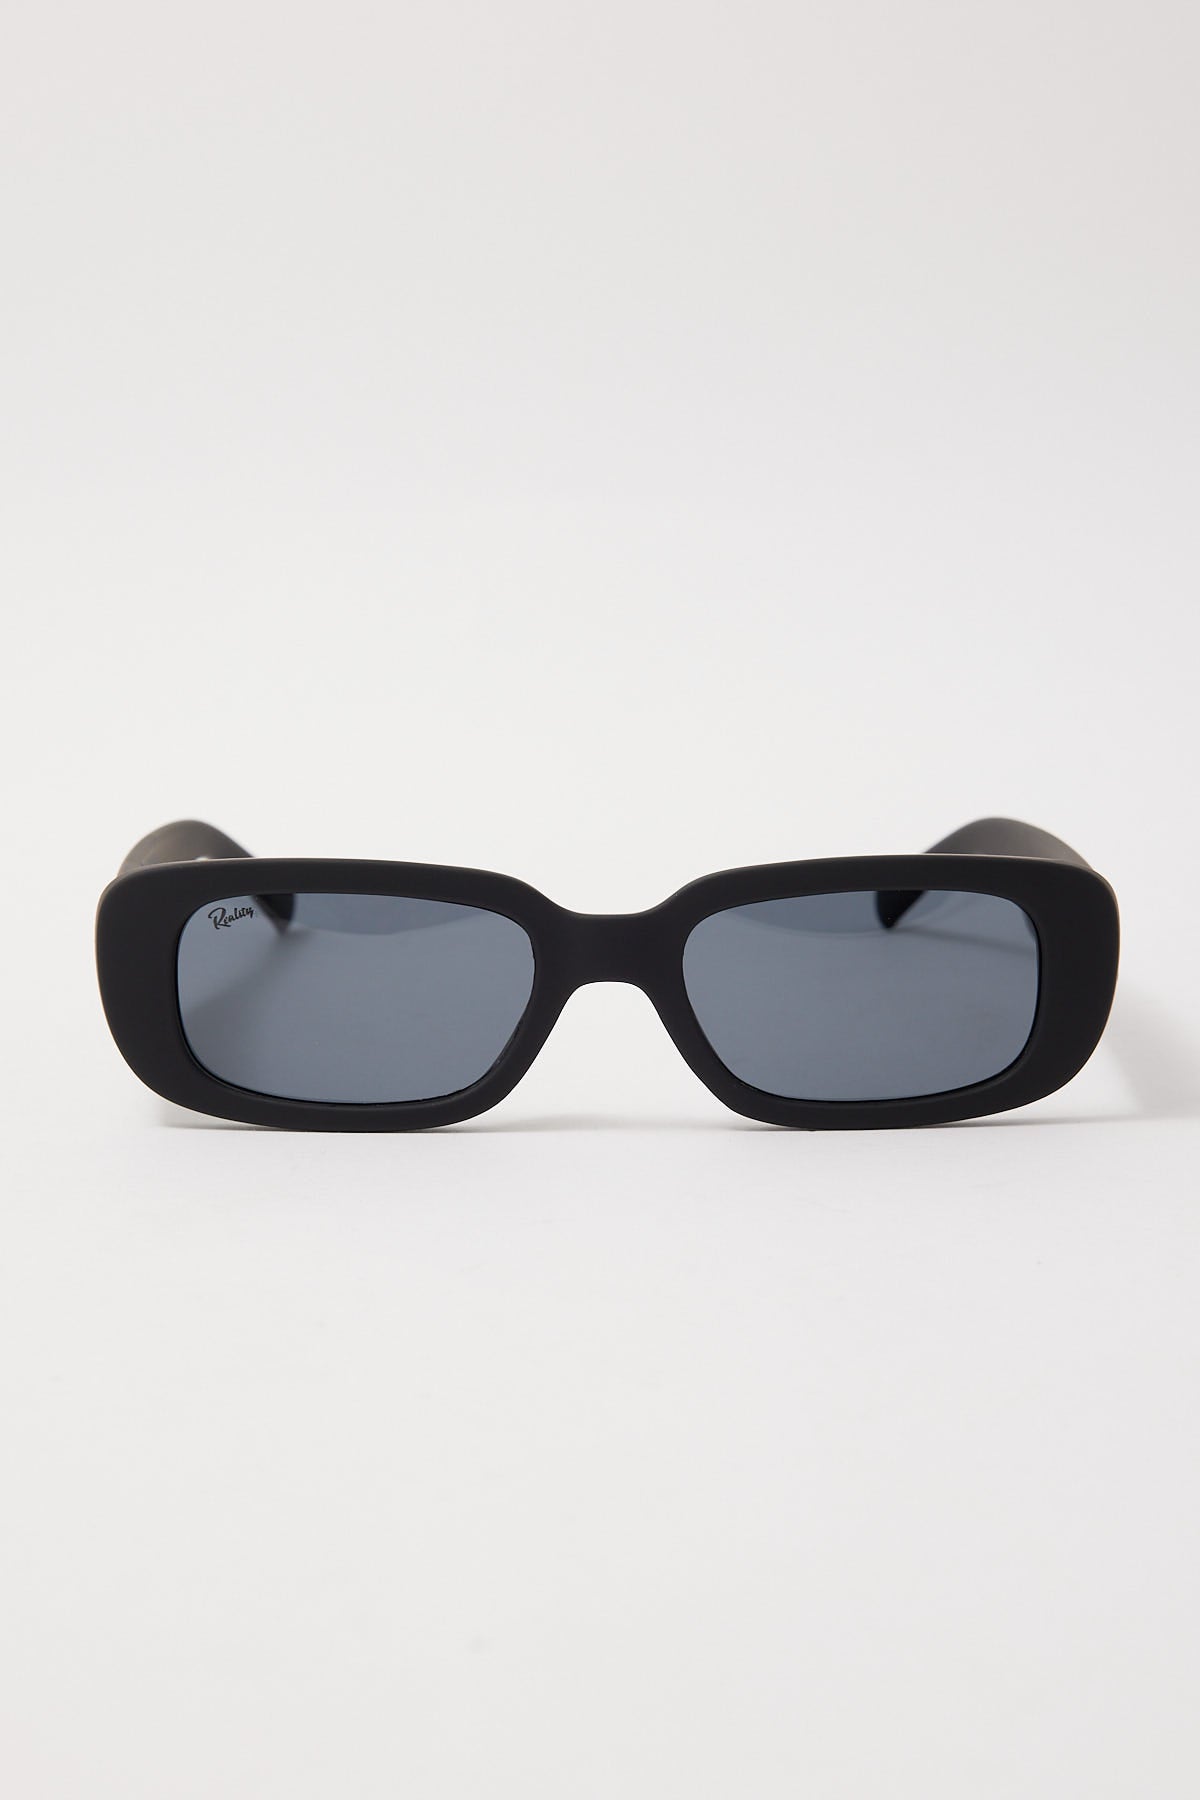 Reality Eyewear X-ray Specs Matte Black